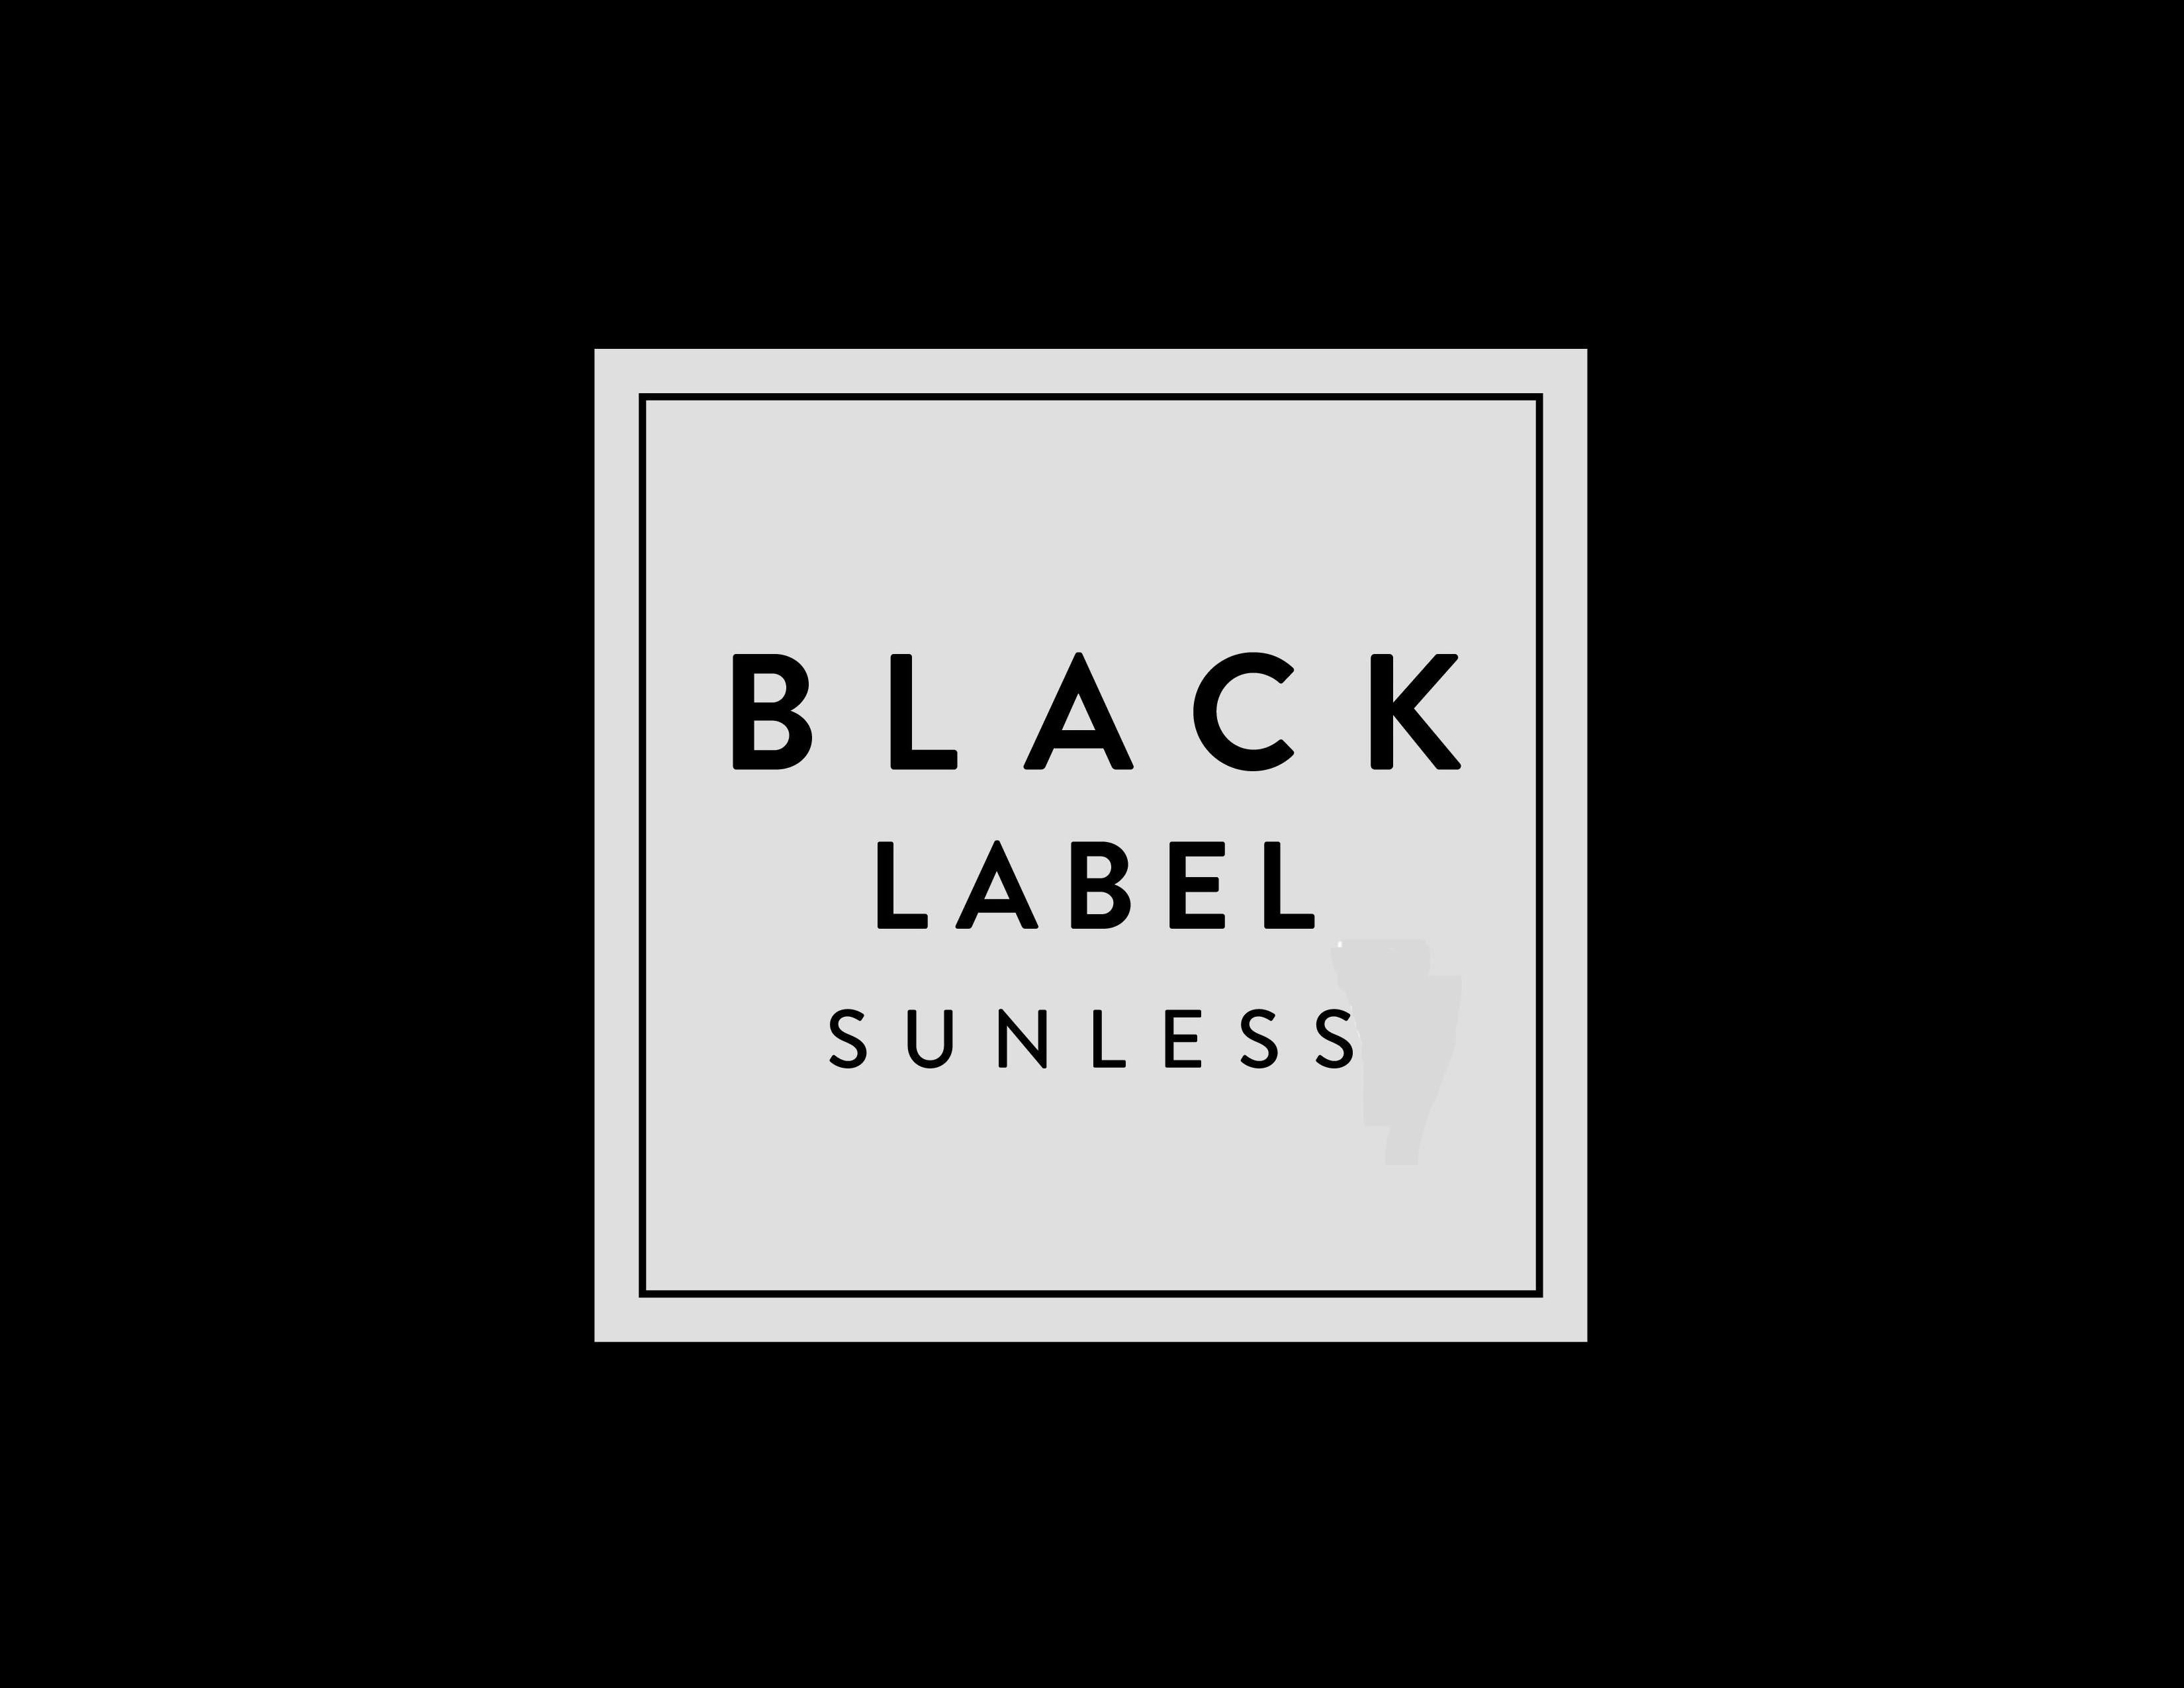  BLACK LABEL SUNLESS